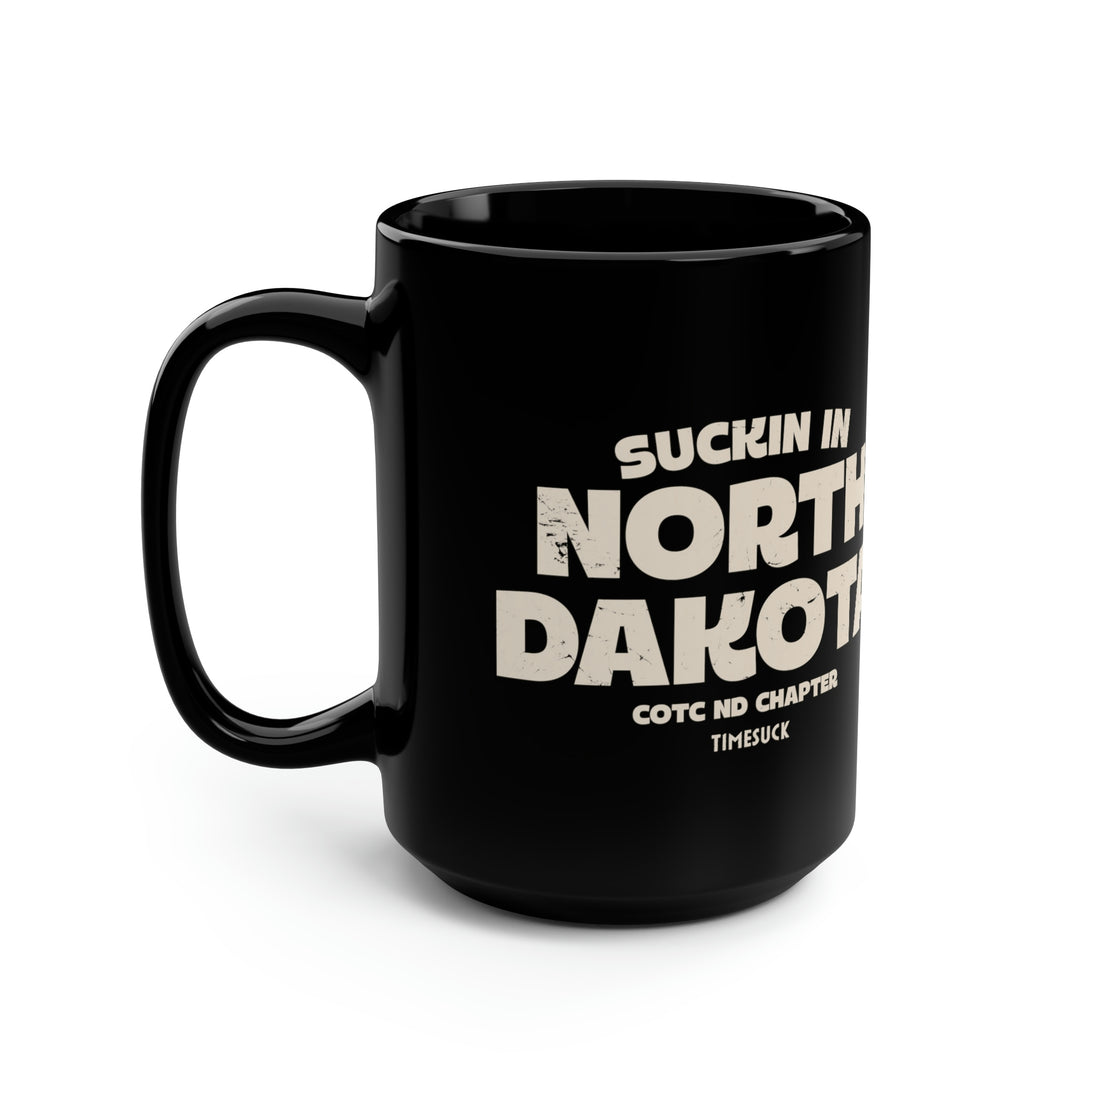 North Dakota Cult Mug